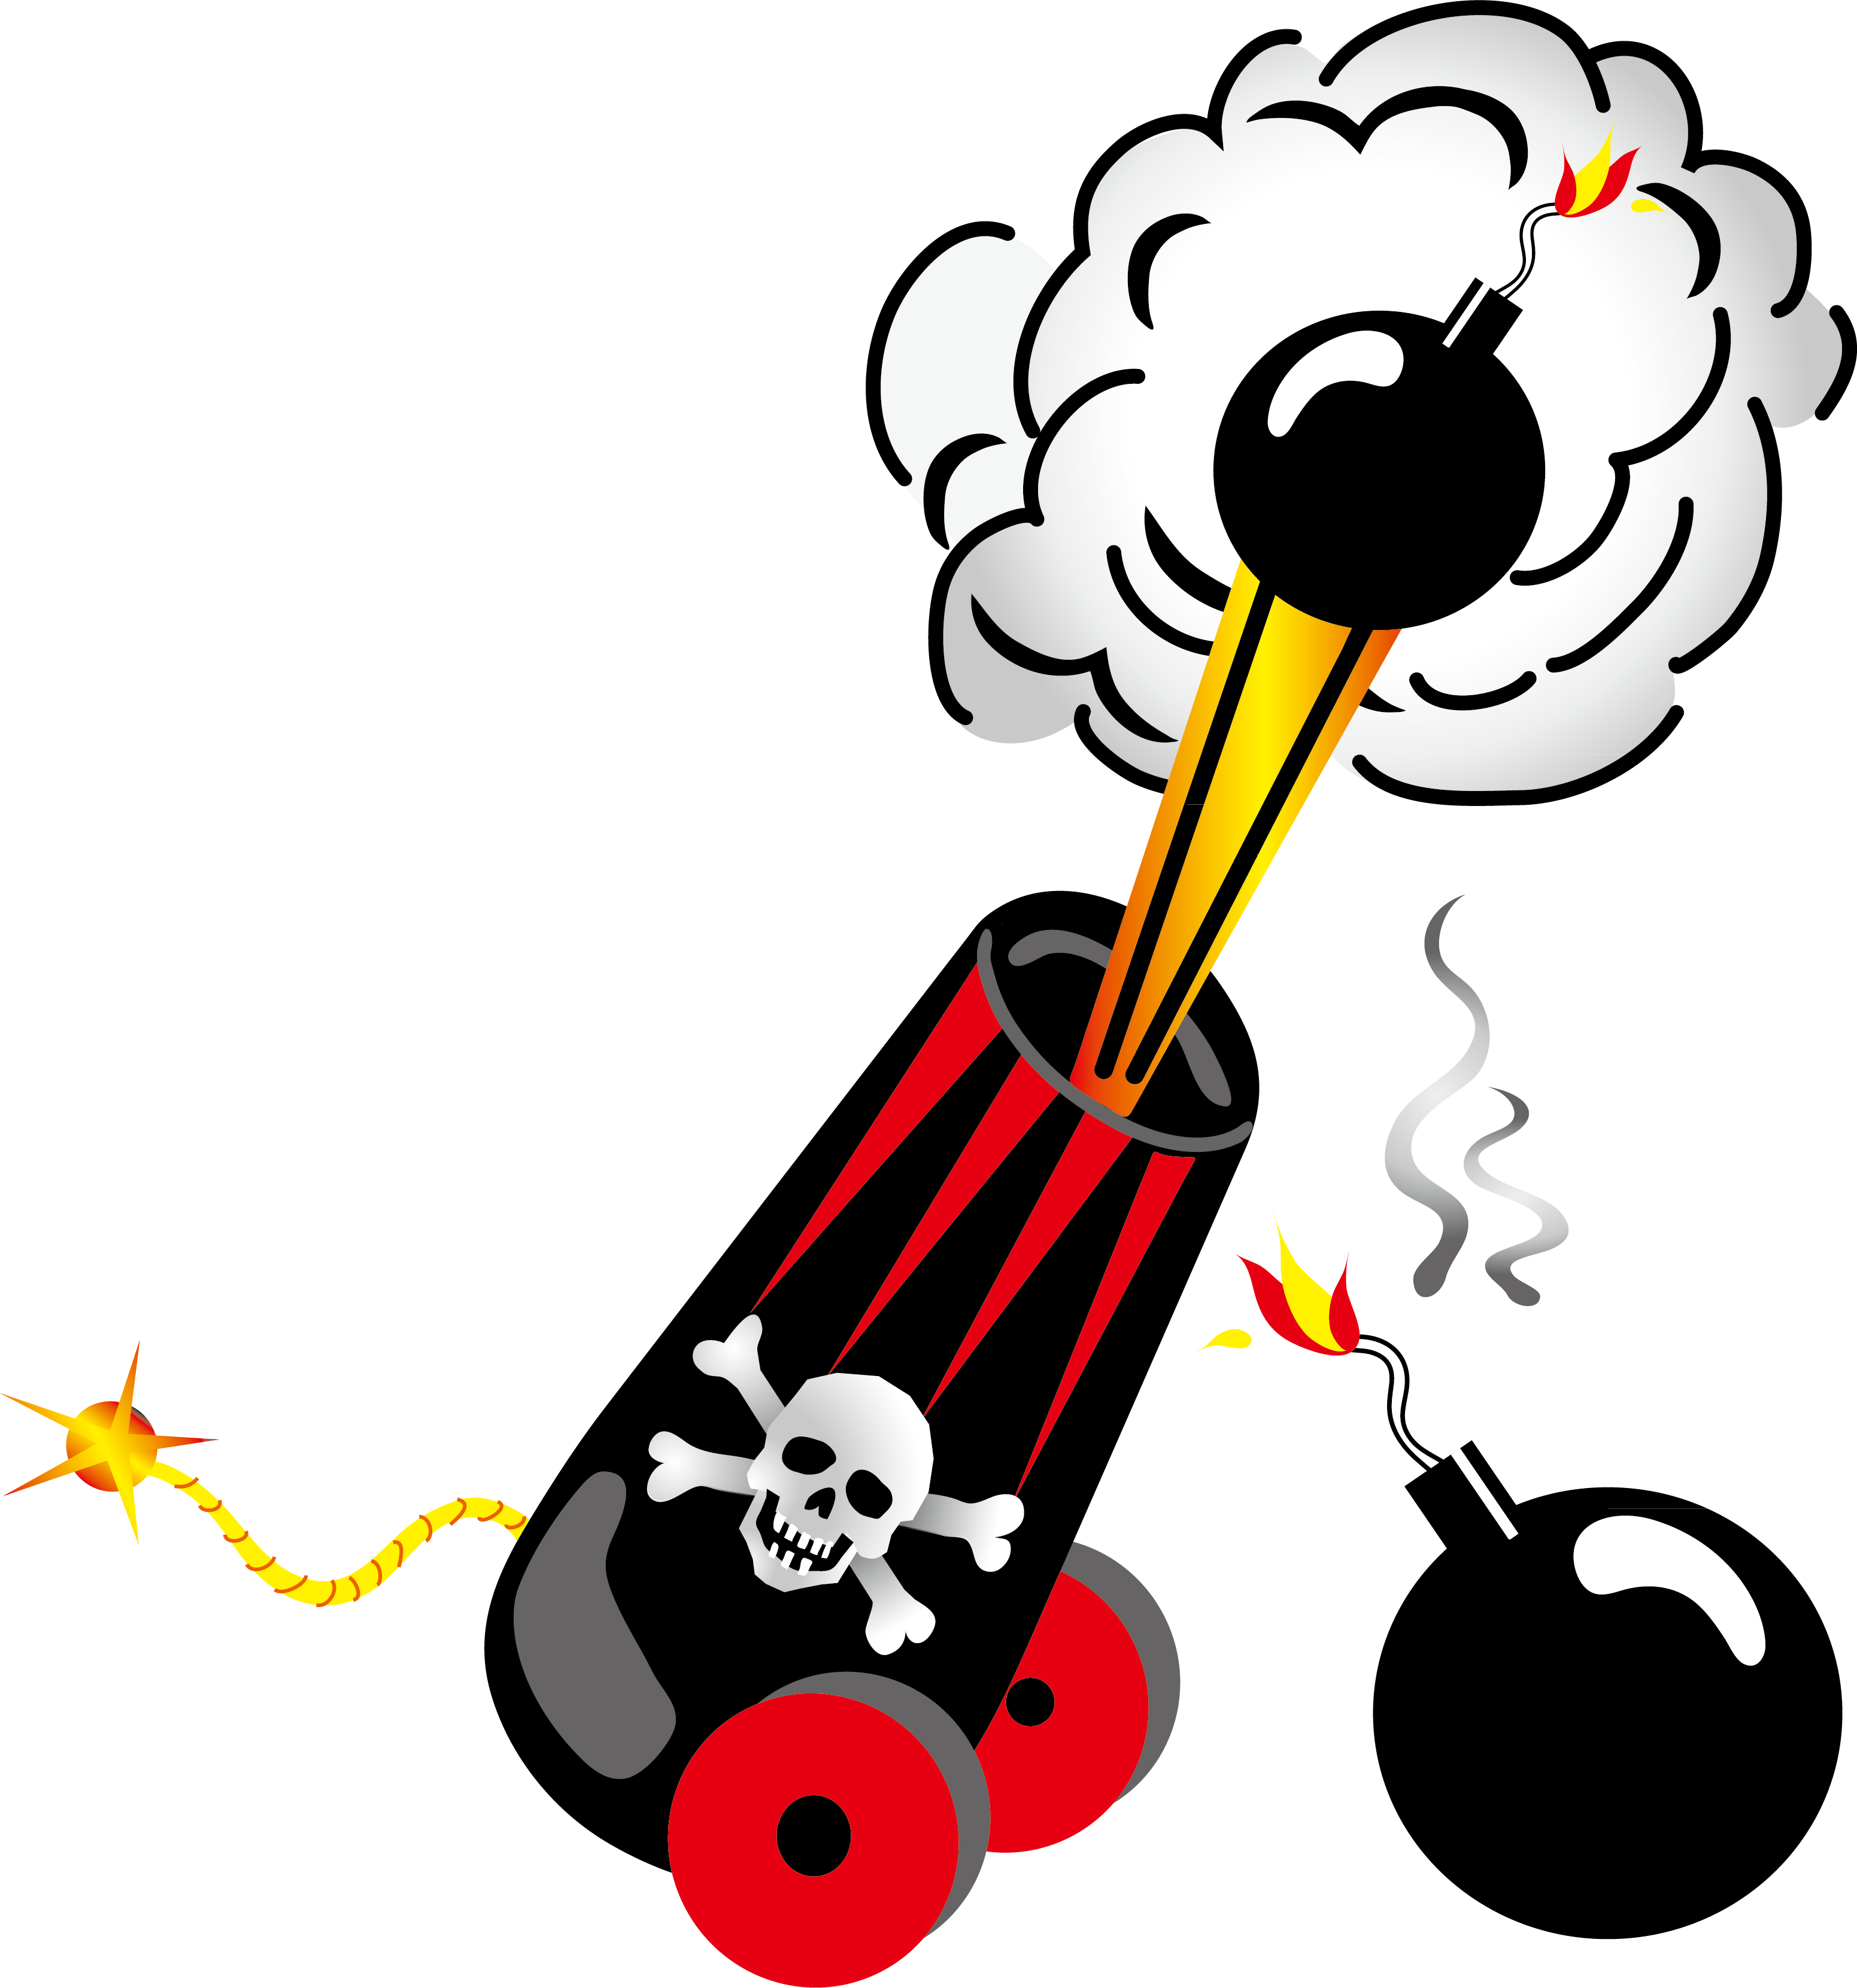 Pirate Cannon Firing Bomb Illustration